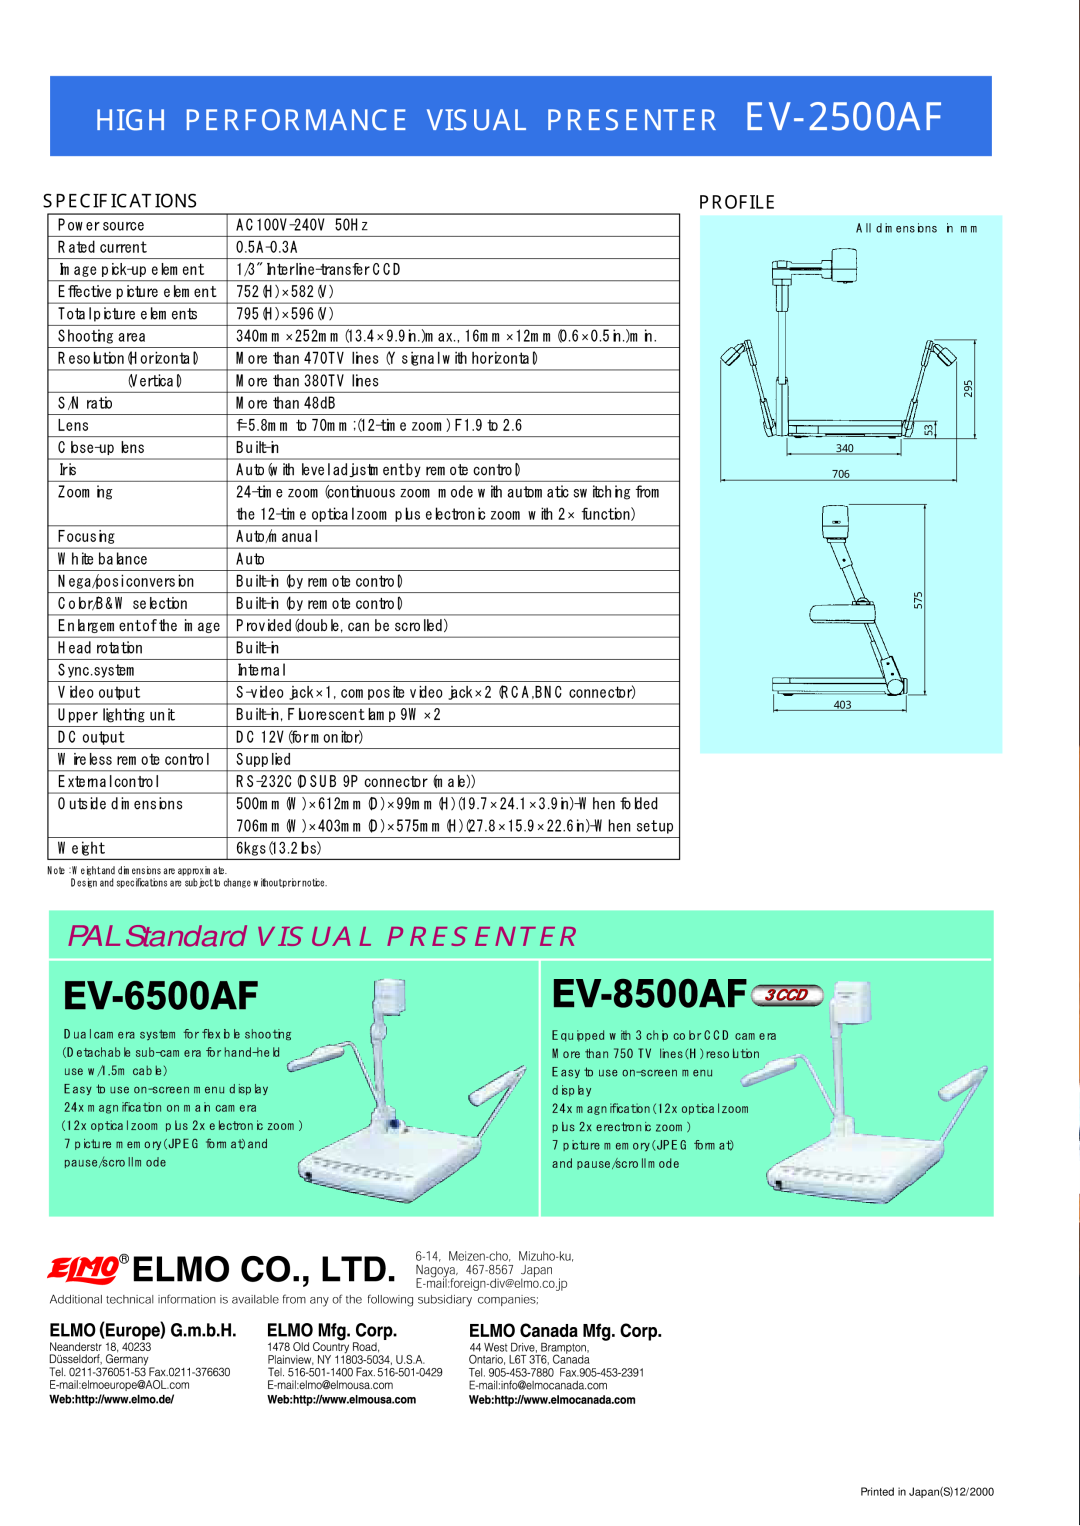 Elmo manual HIGH PERFORMANCE VISUAL PRESENTER EV-2500AF, PAL Standard VISUAL PRESENTER, Specifications, Profile, 3CCD 